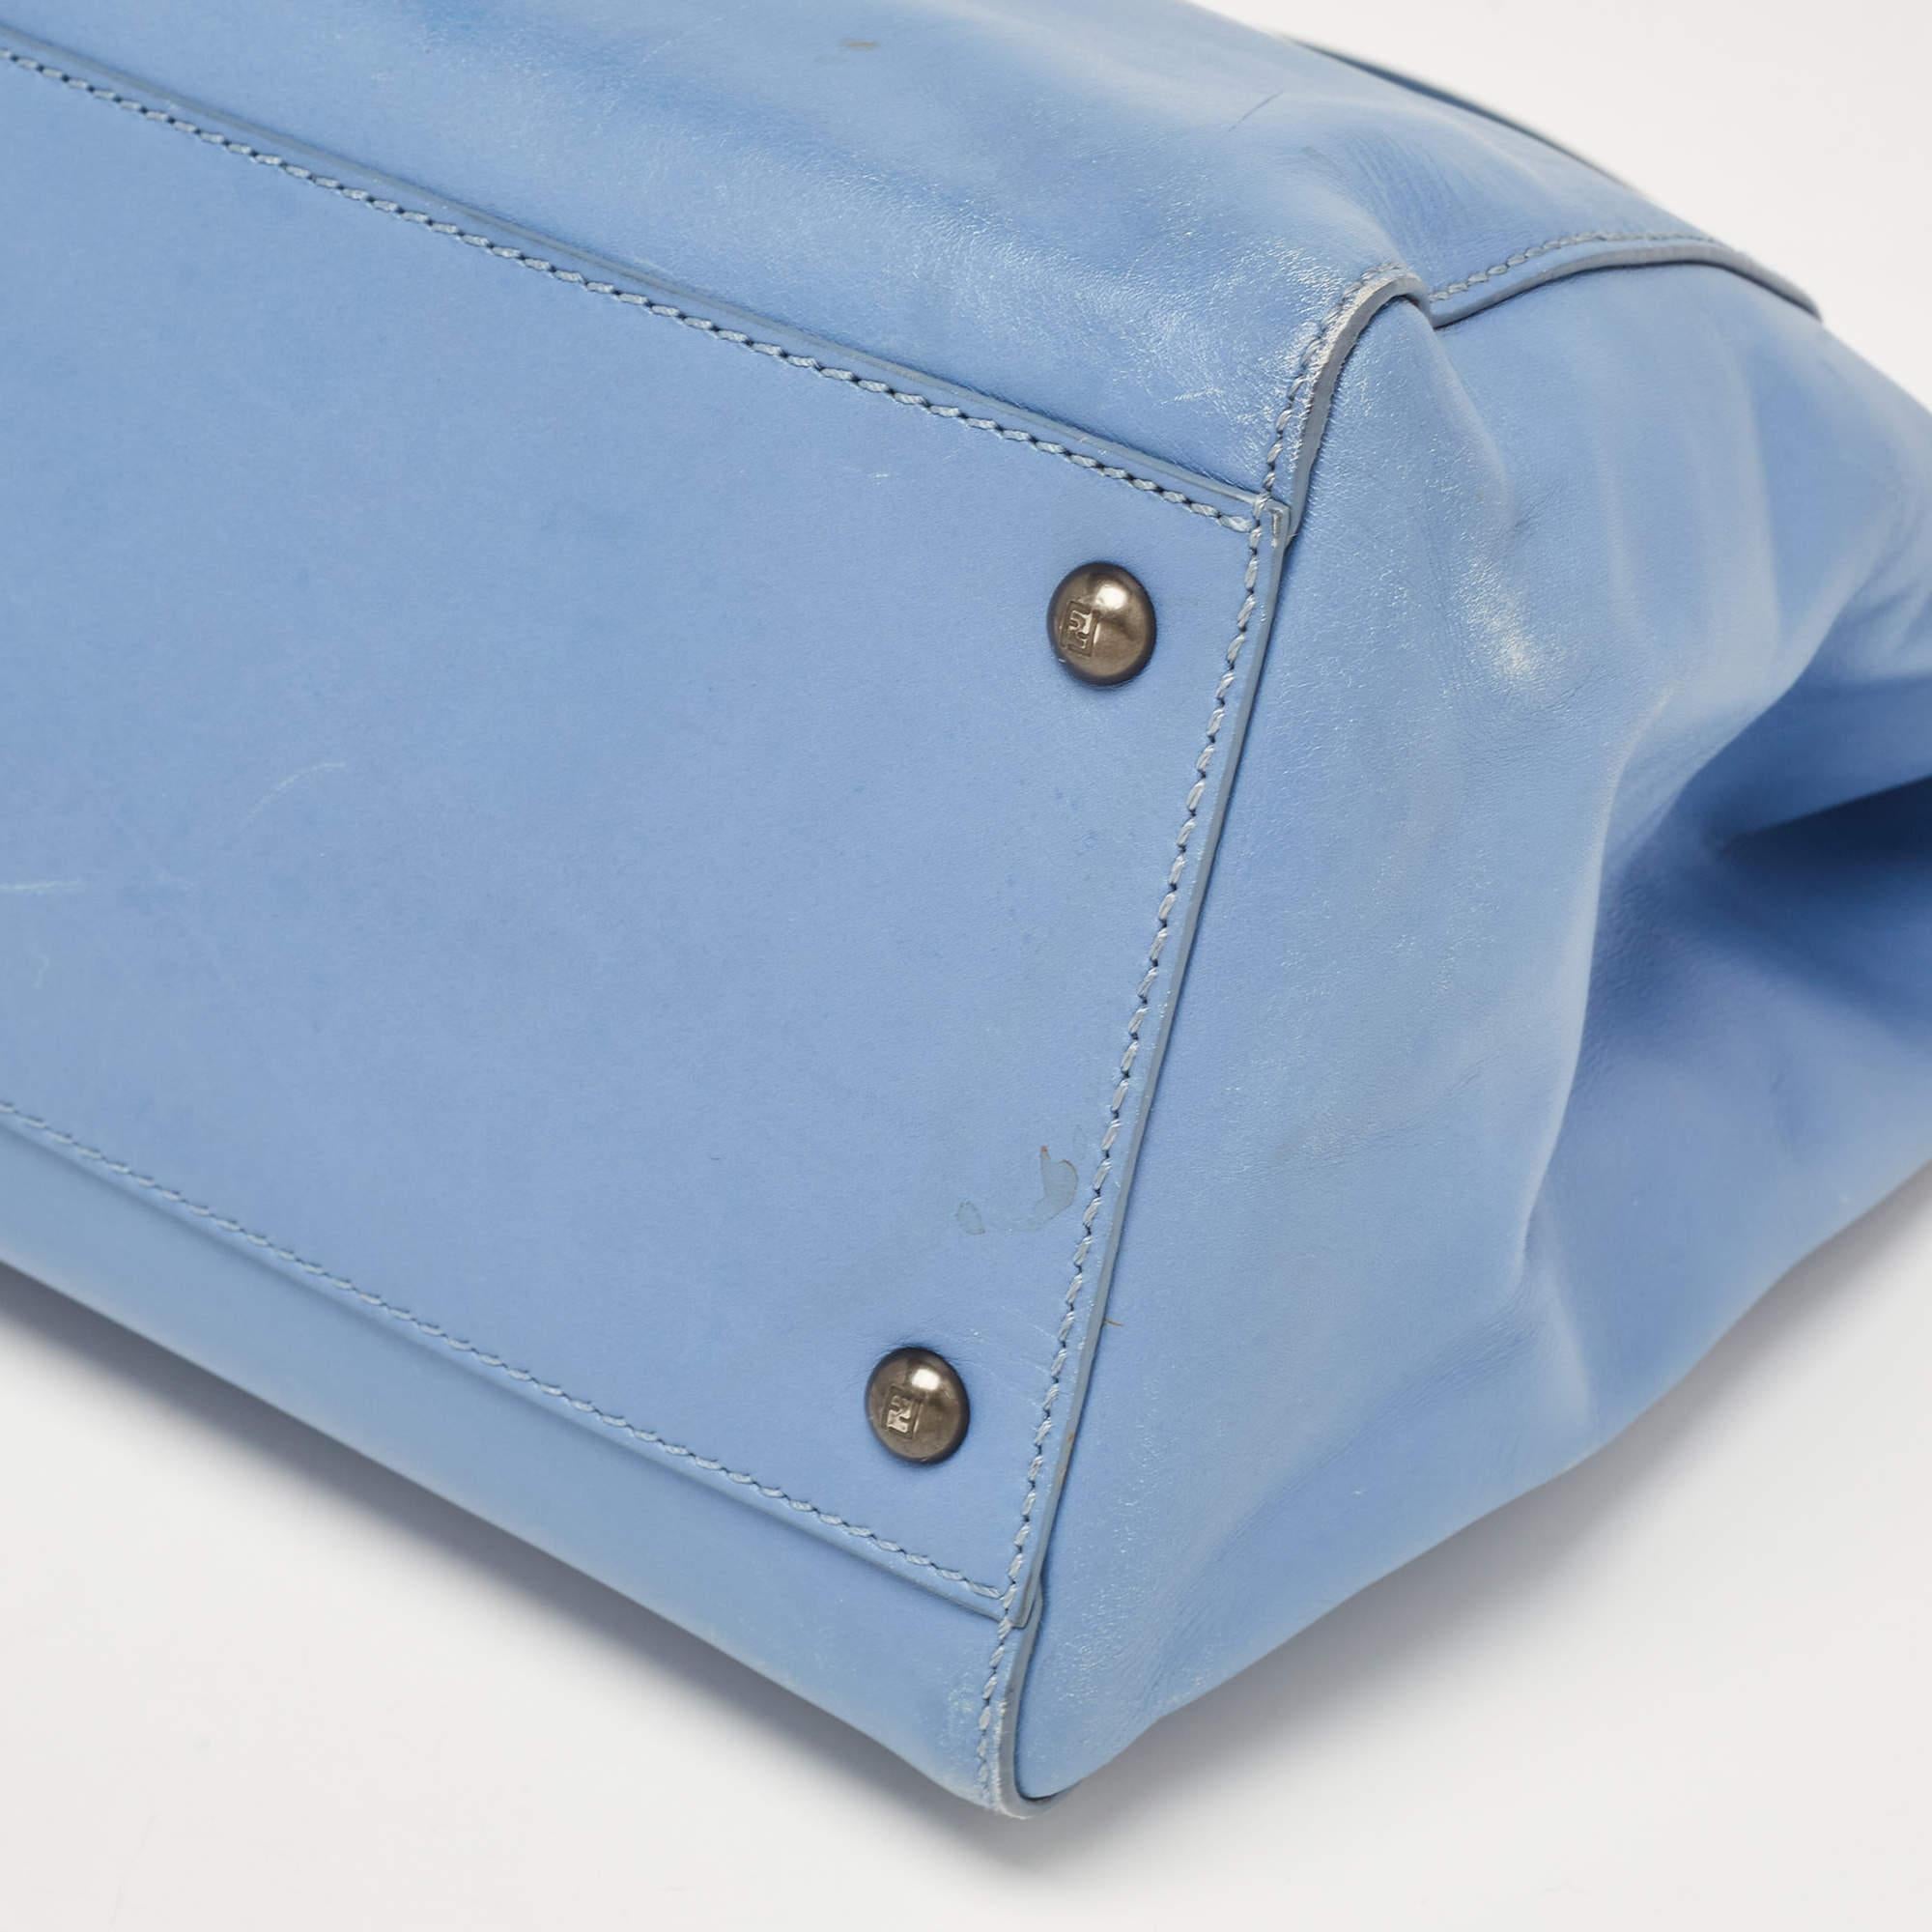 Fendi Blue Leather Large Peekaboo Top Handle Bag For Sale 5